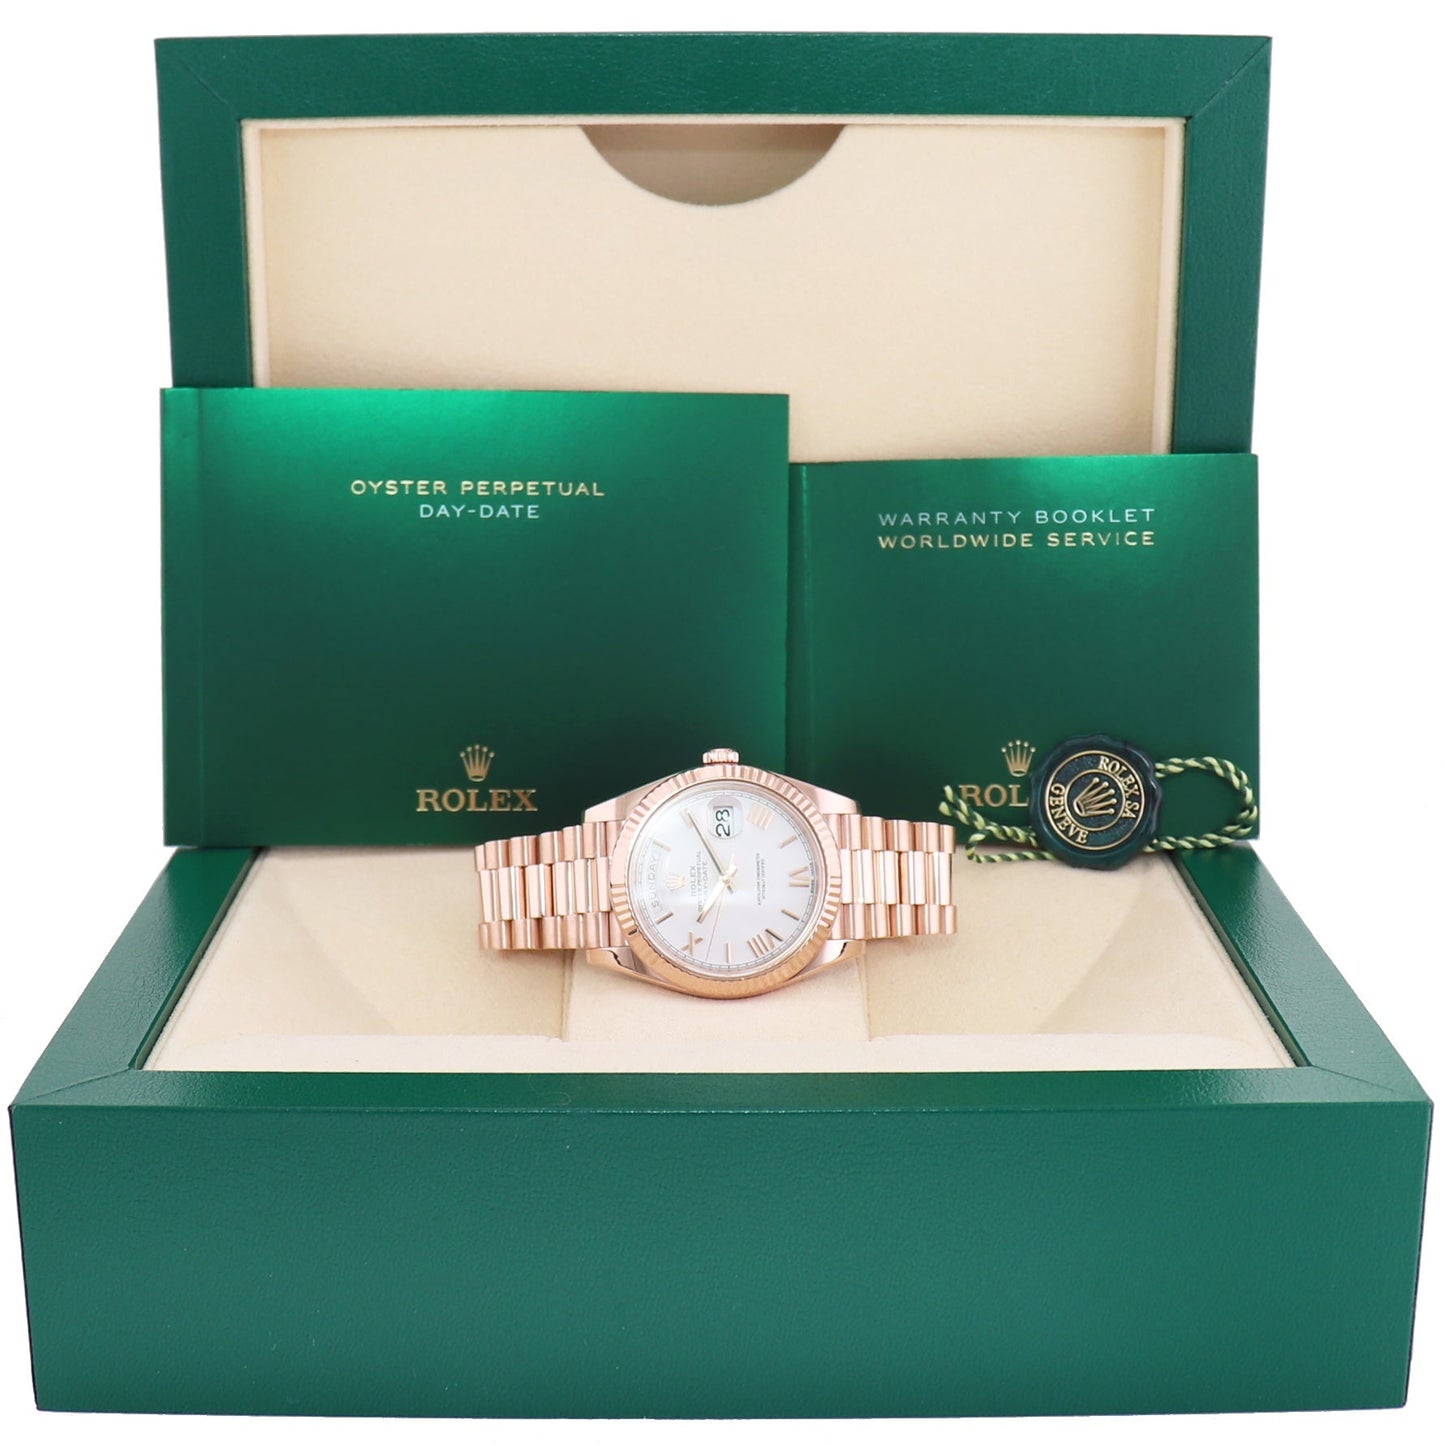 2020 MINT Rolex President 40mm Rose Gold White Roman 228235 Watch Box